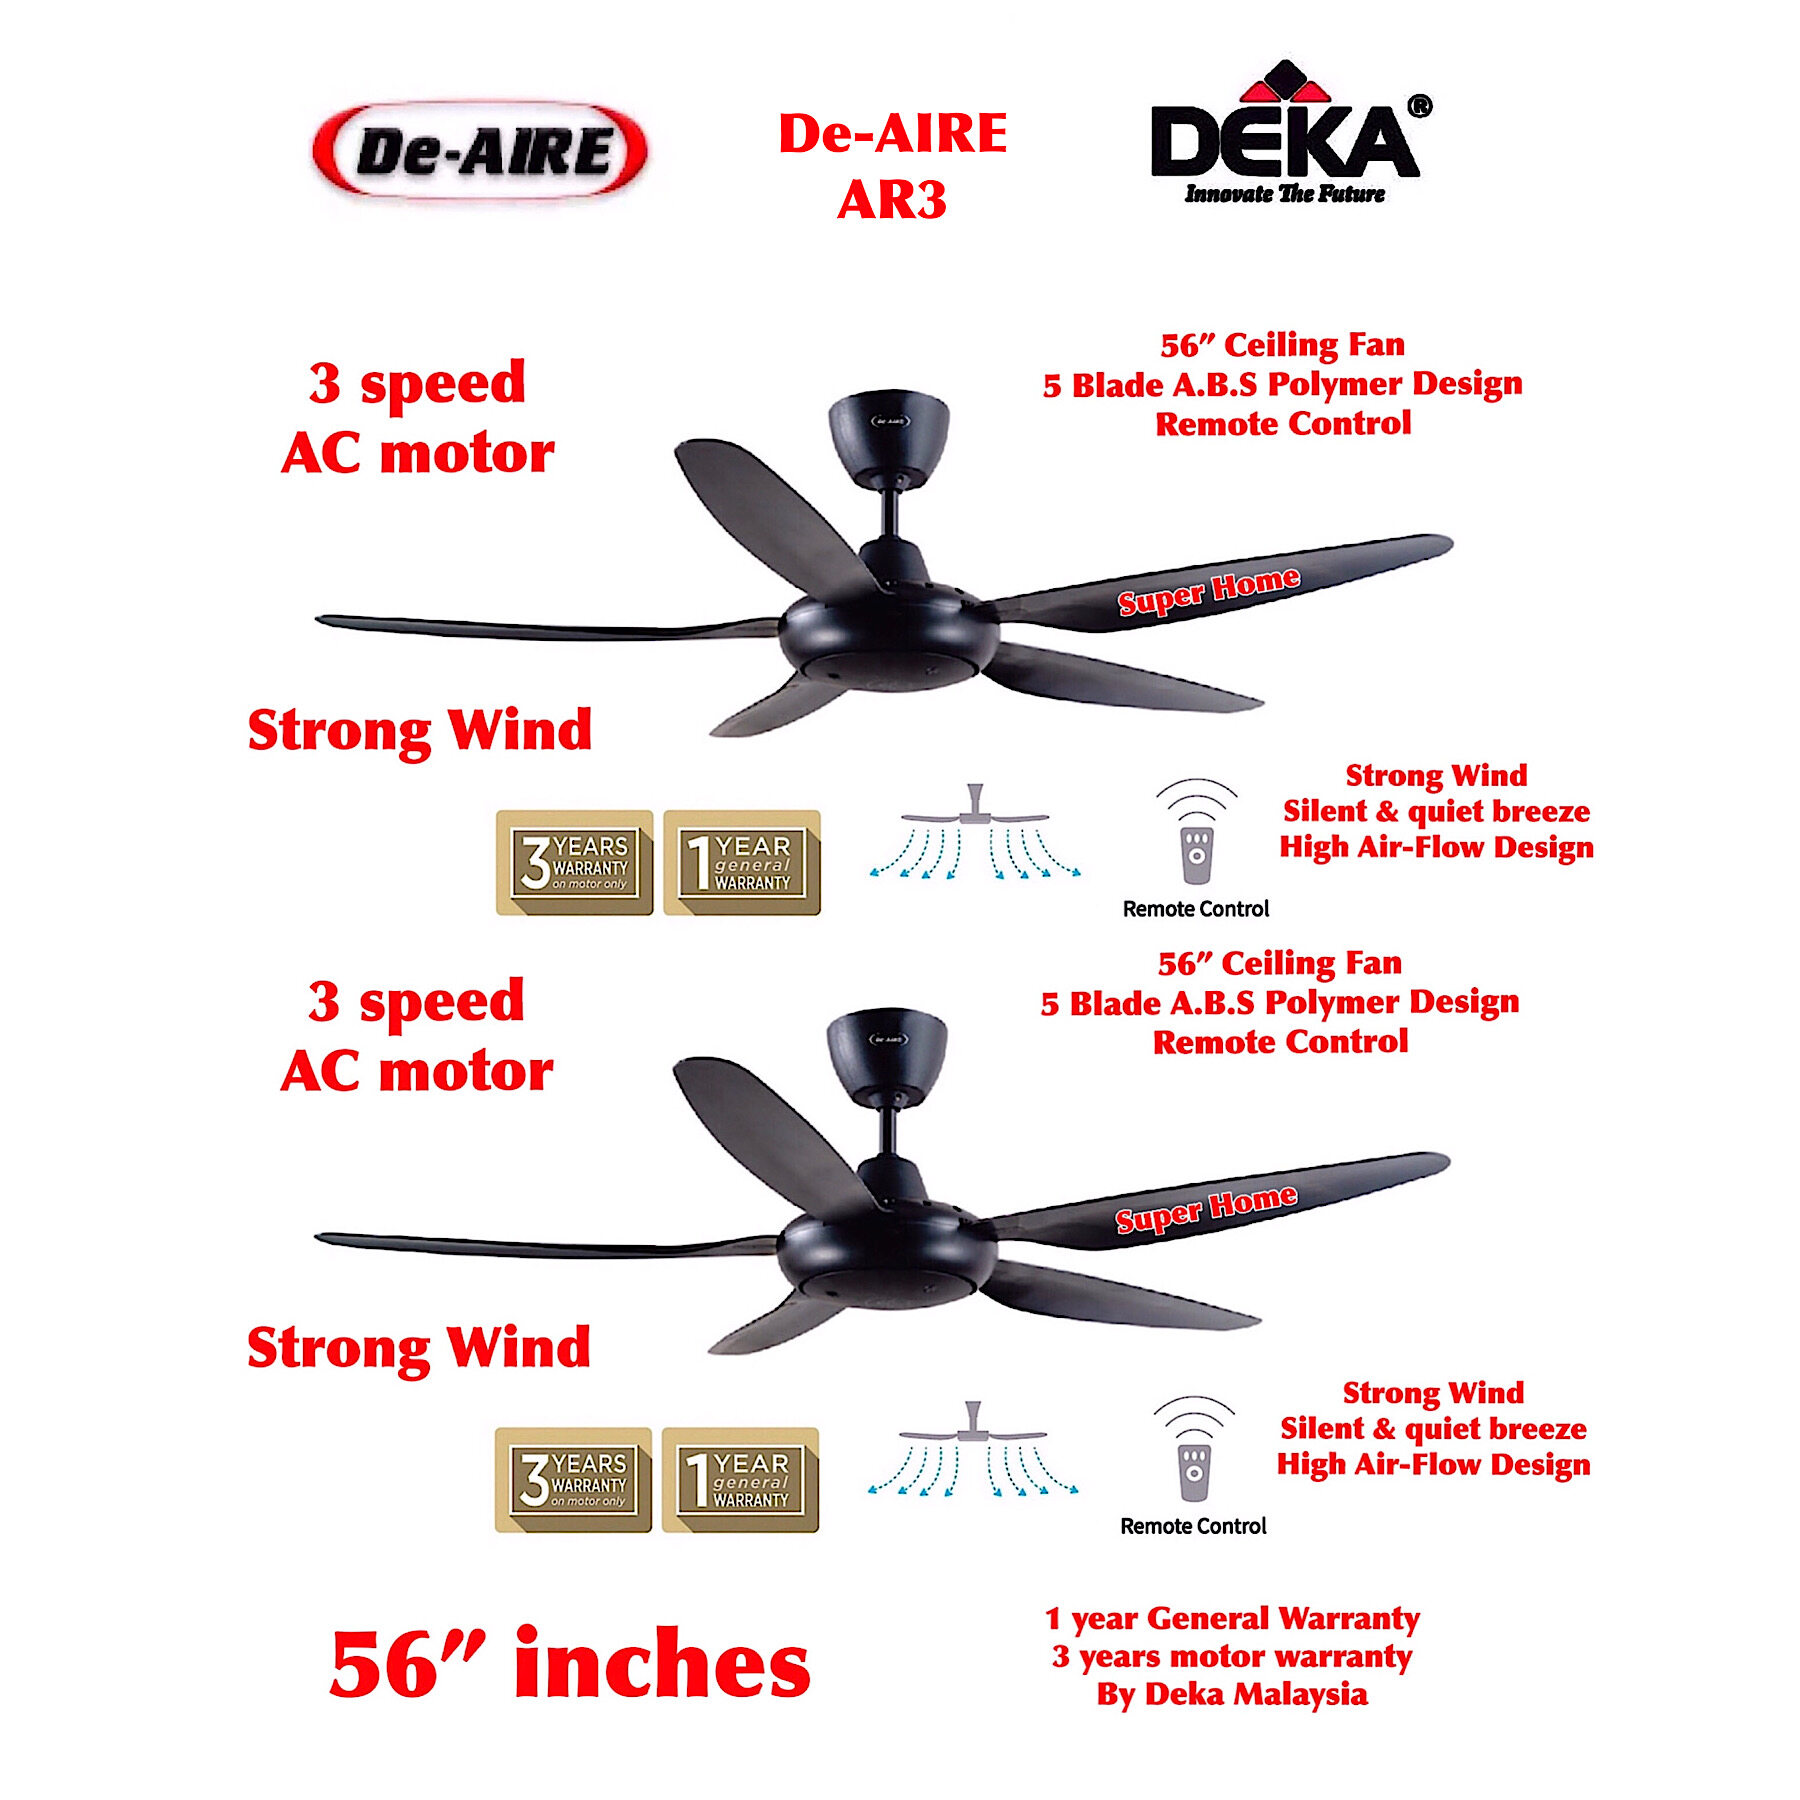 Deka DE-AIRE AR3 56 inch Ceiling Fan With Remote Control 5 Blades A.B.S Polymer Design - Black